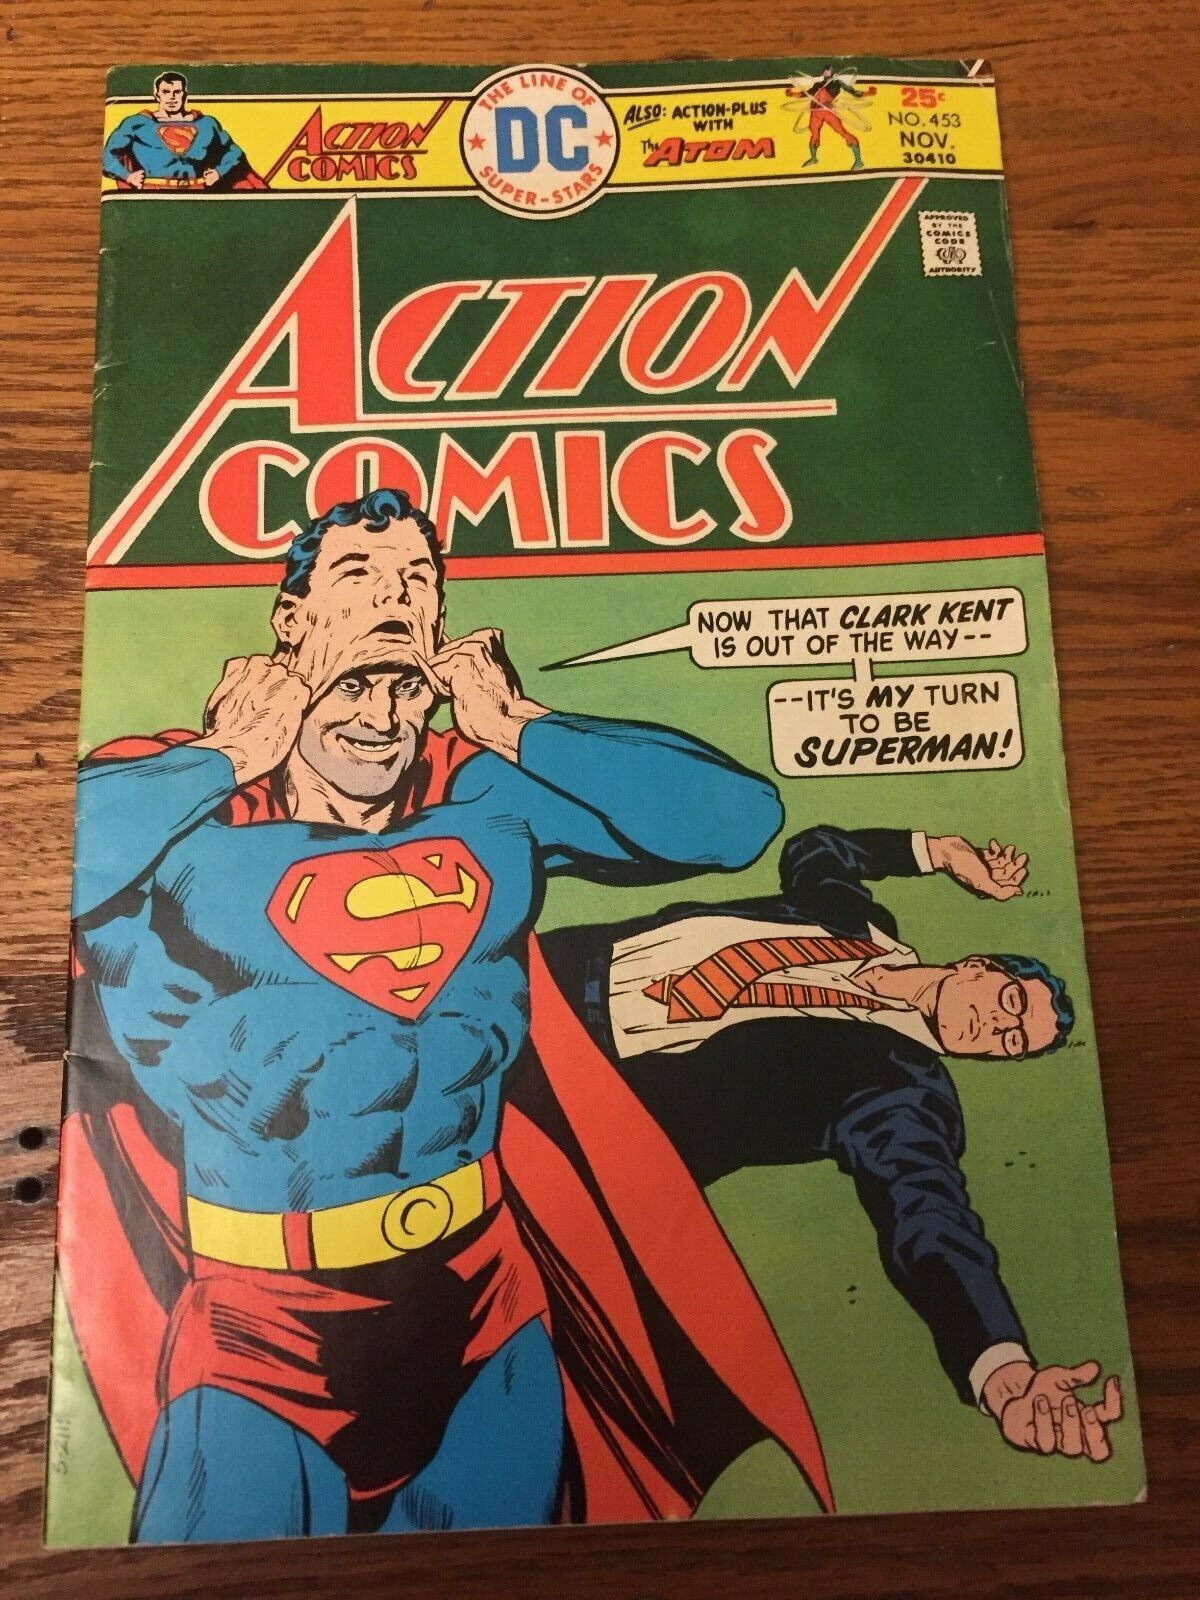 DC ACTION COMICS - ACTION PLUS WITH THE ATOM  - SUPERMAN - #453 11/1975